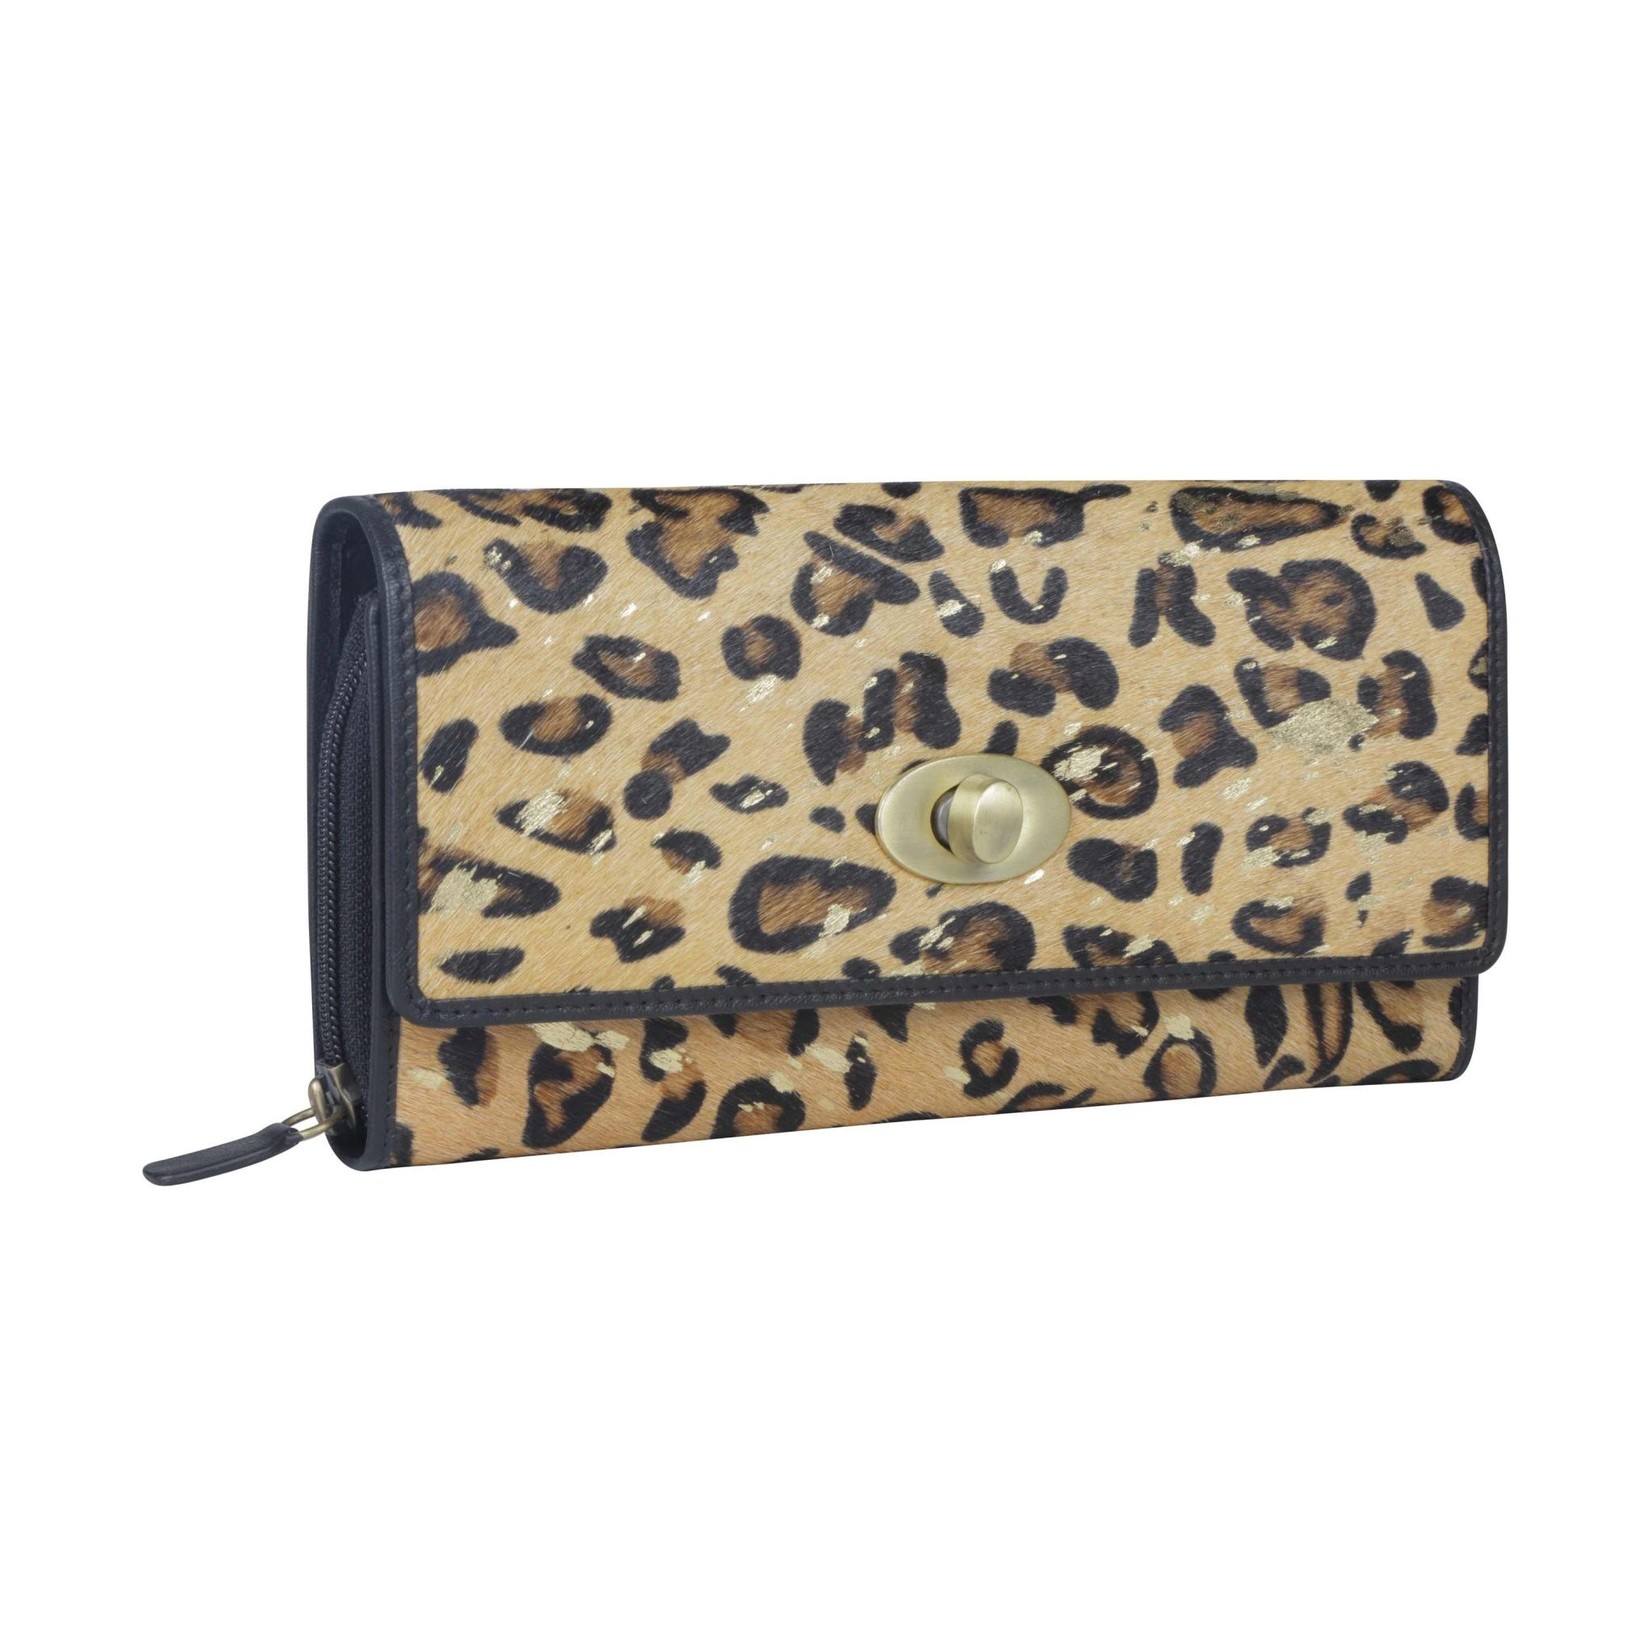 Myra Bags S-3628 Ornate Leopard Print Wallet